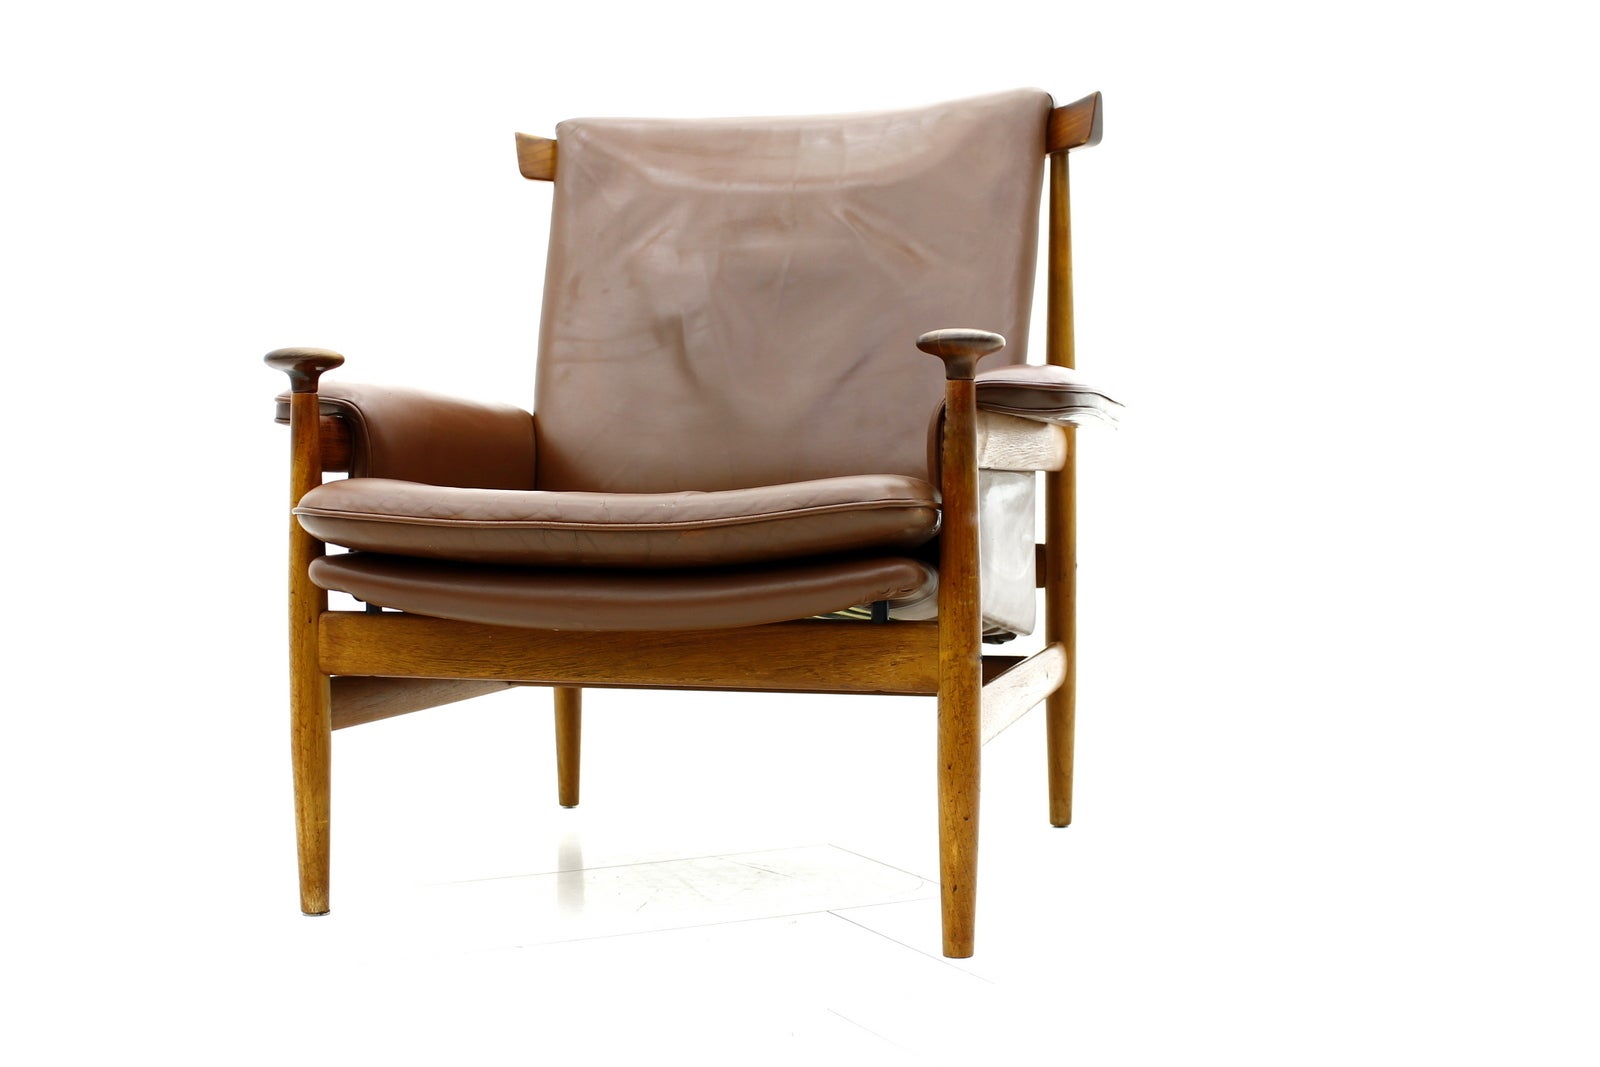 Finn Juhl Bwana Lounge Chair, France & Son, Denmark